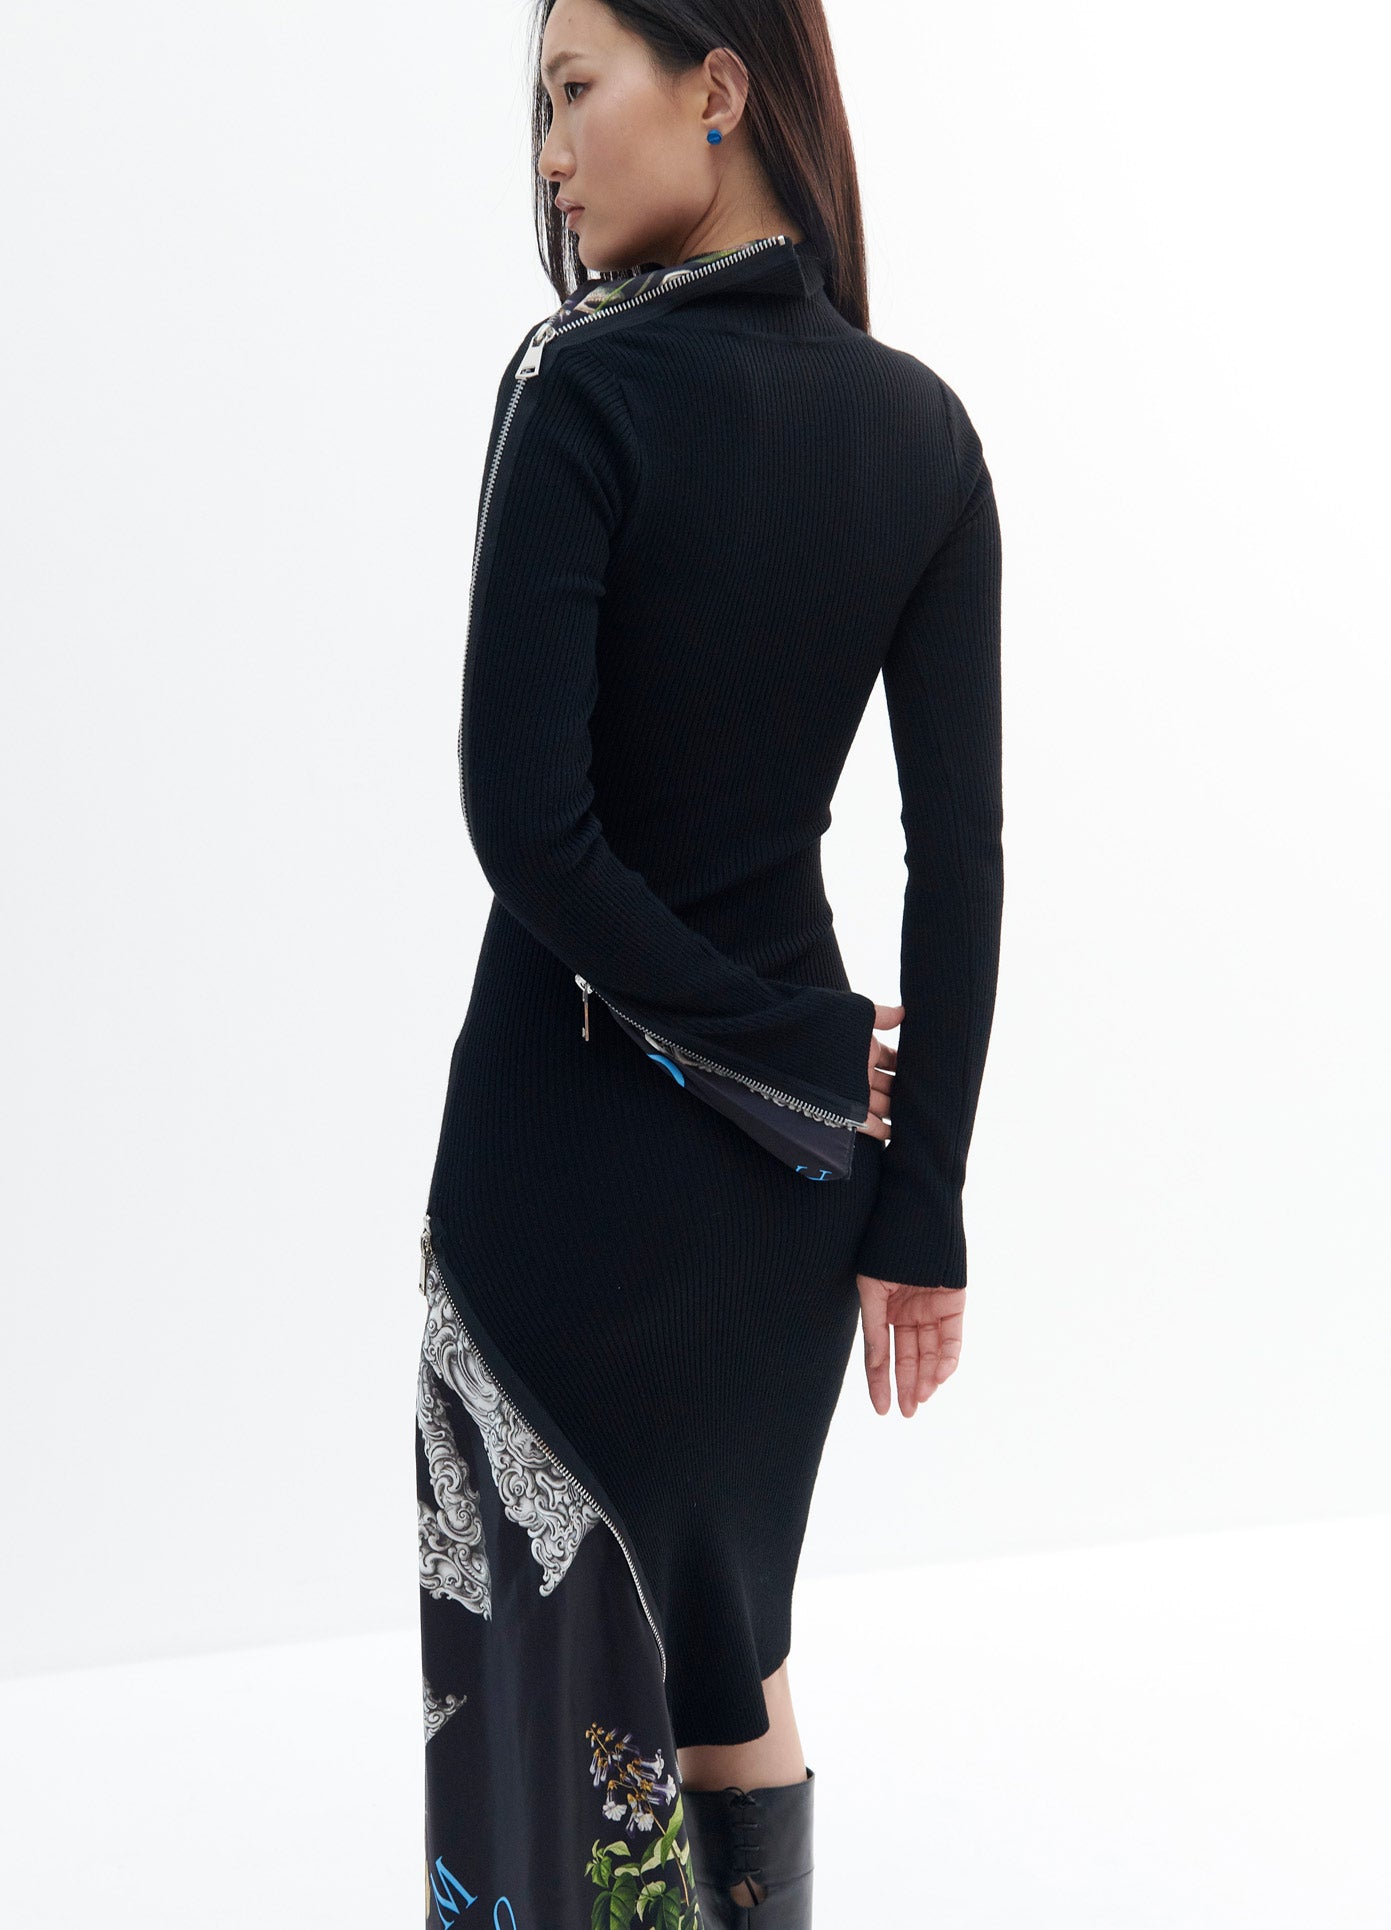 MONSE Long Sleeve Print Inset Zipper Detail Turtleneck Dress in Black Print on Model Back View